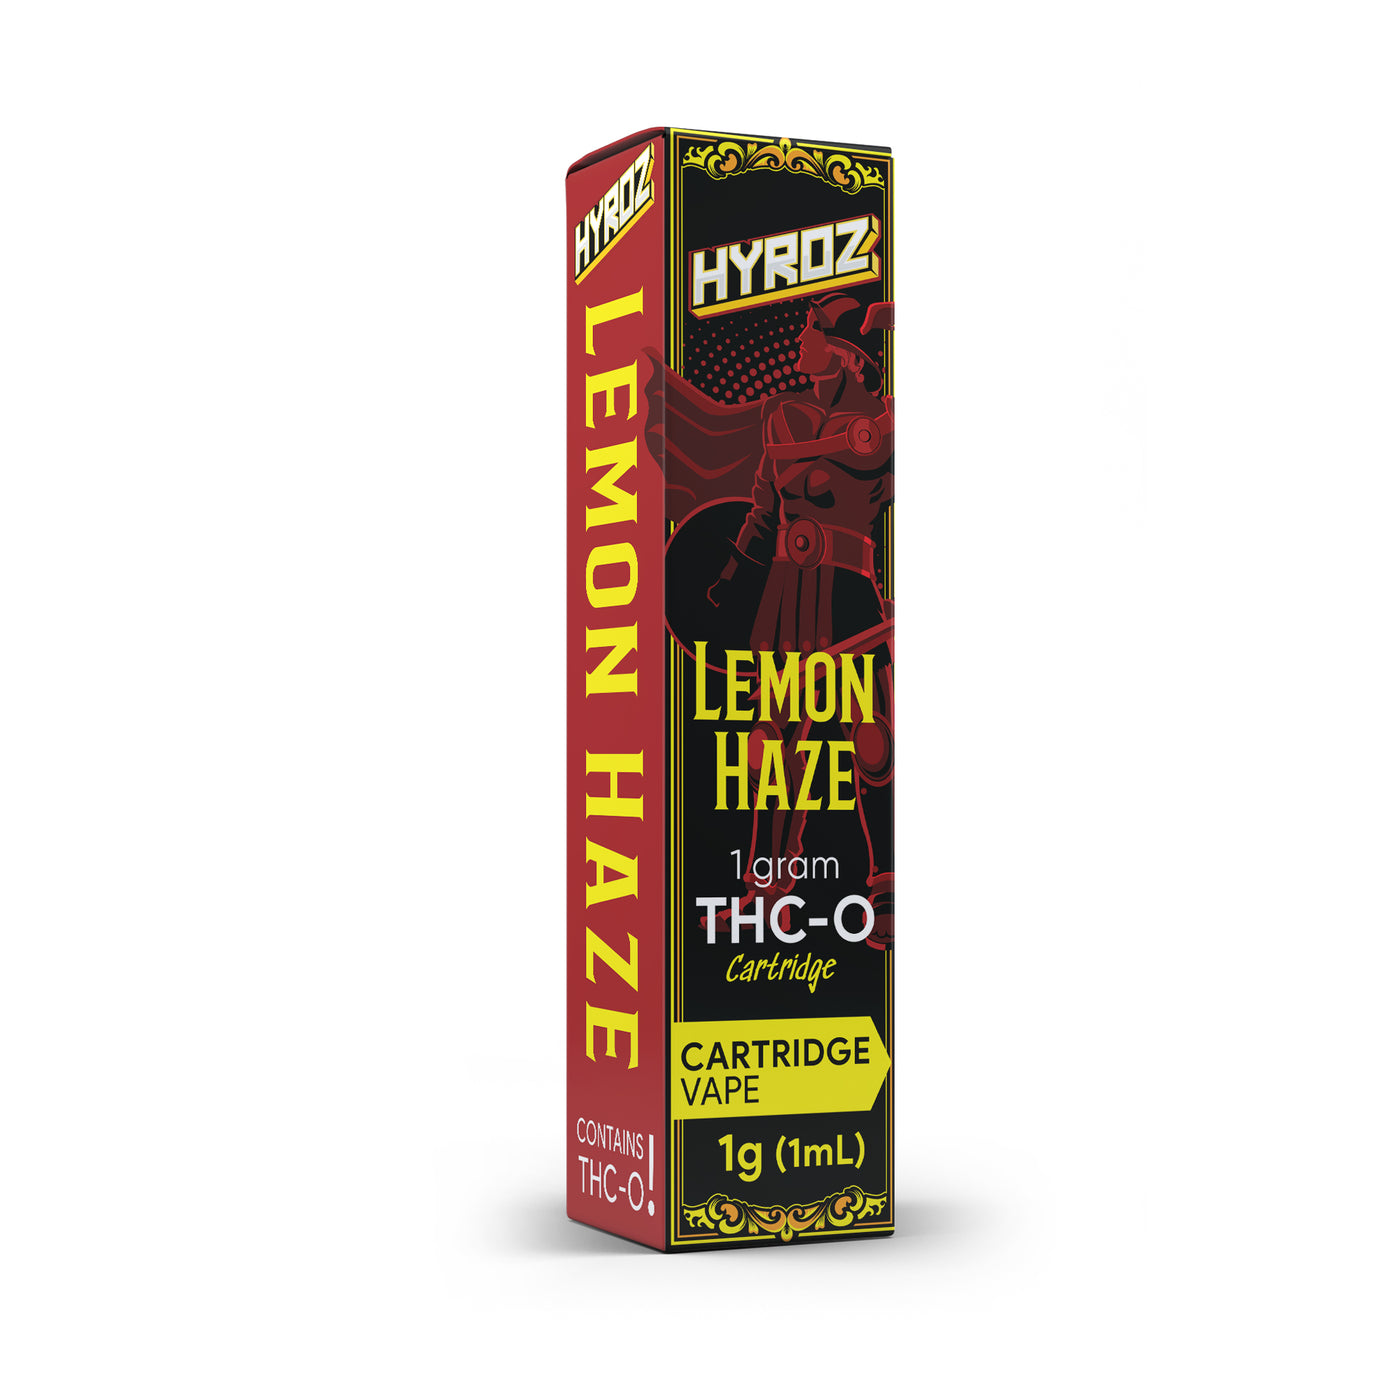 THCO Cartridge Lemon Haze | Hyroz | Premium Hemp-Derived D8, CBG, CBN, HHC, And THCO Products